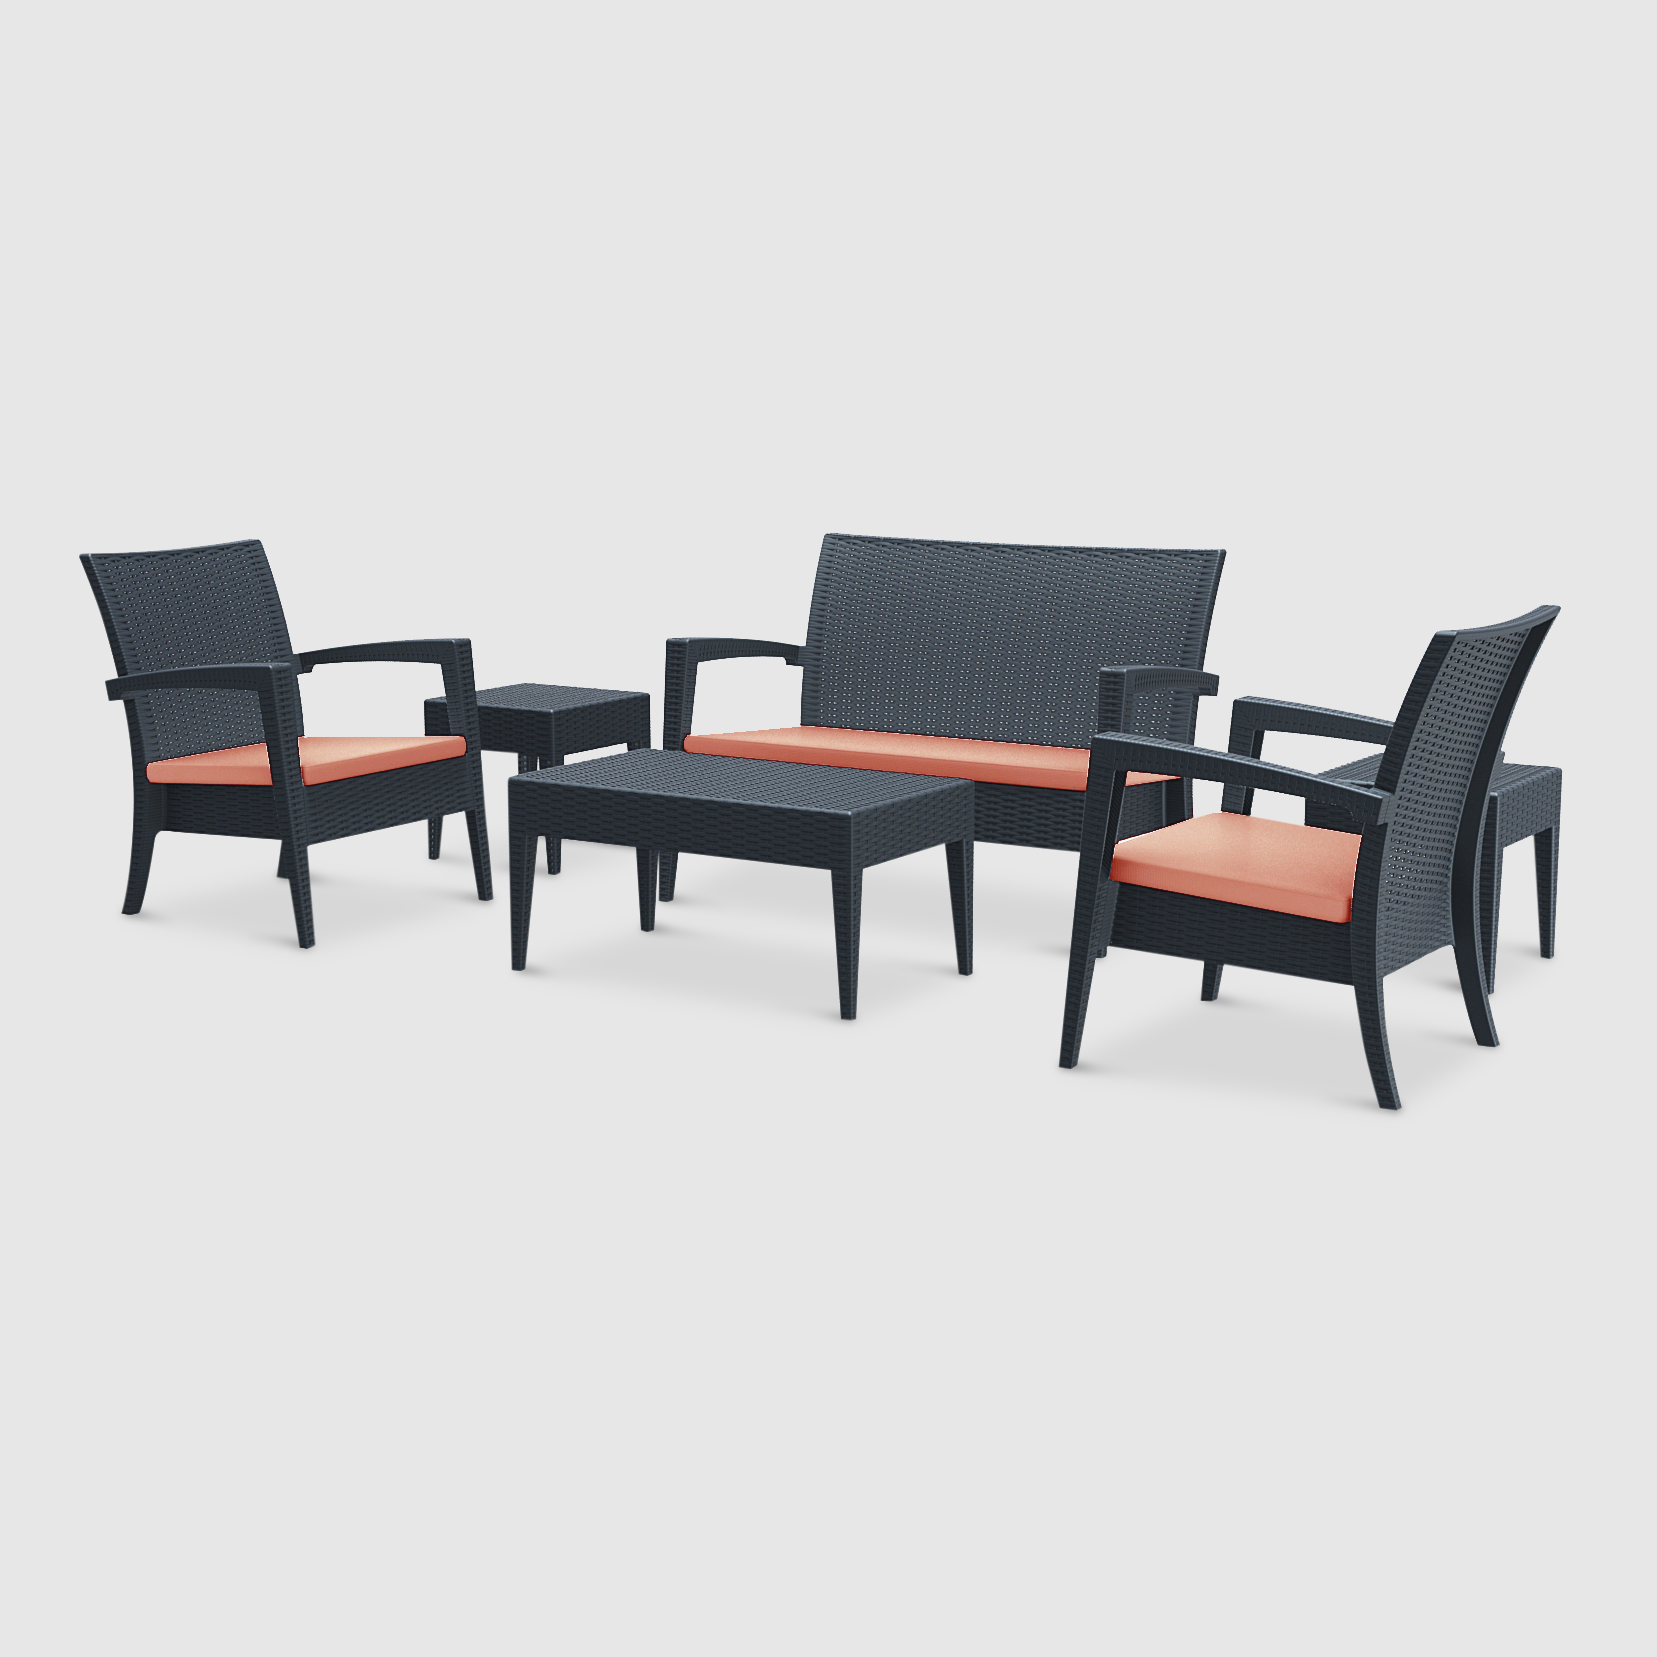 Набор мебели Siesta Contract Miami Lounge антрацитовый 6 предметов набор мебели konway bali 5 предметов